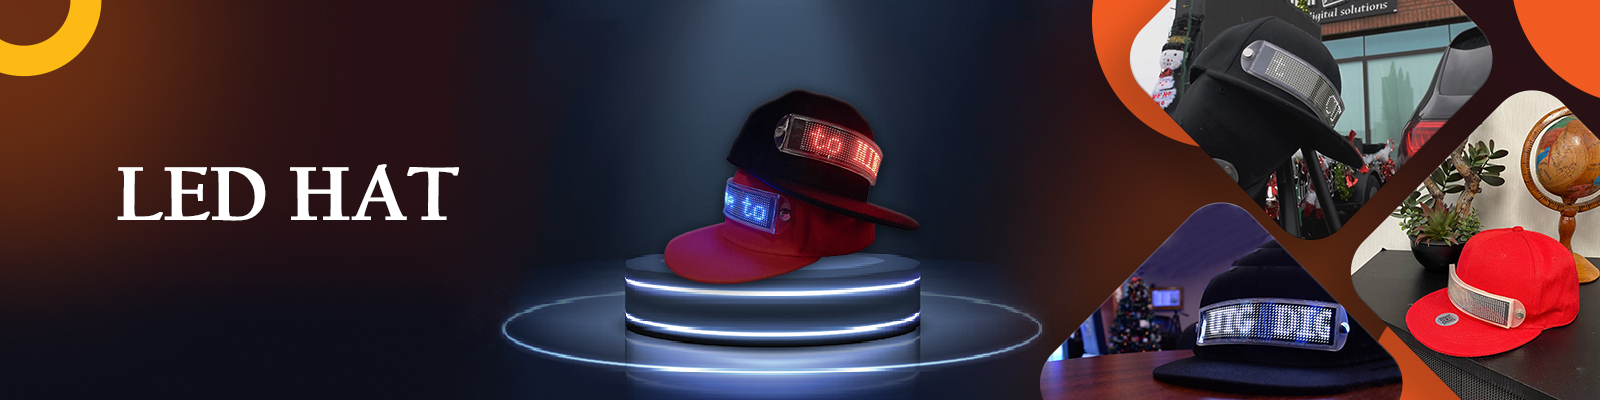 LED hats Buy with link below #marketing #ledhats #ledlights #ledhat #s